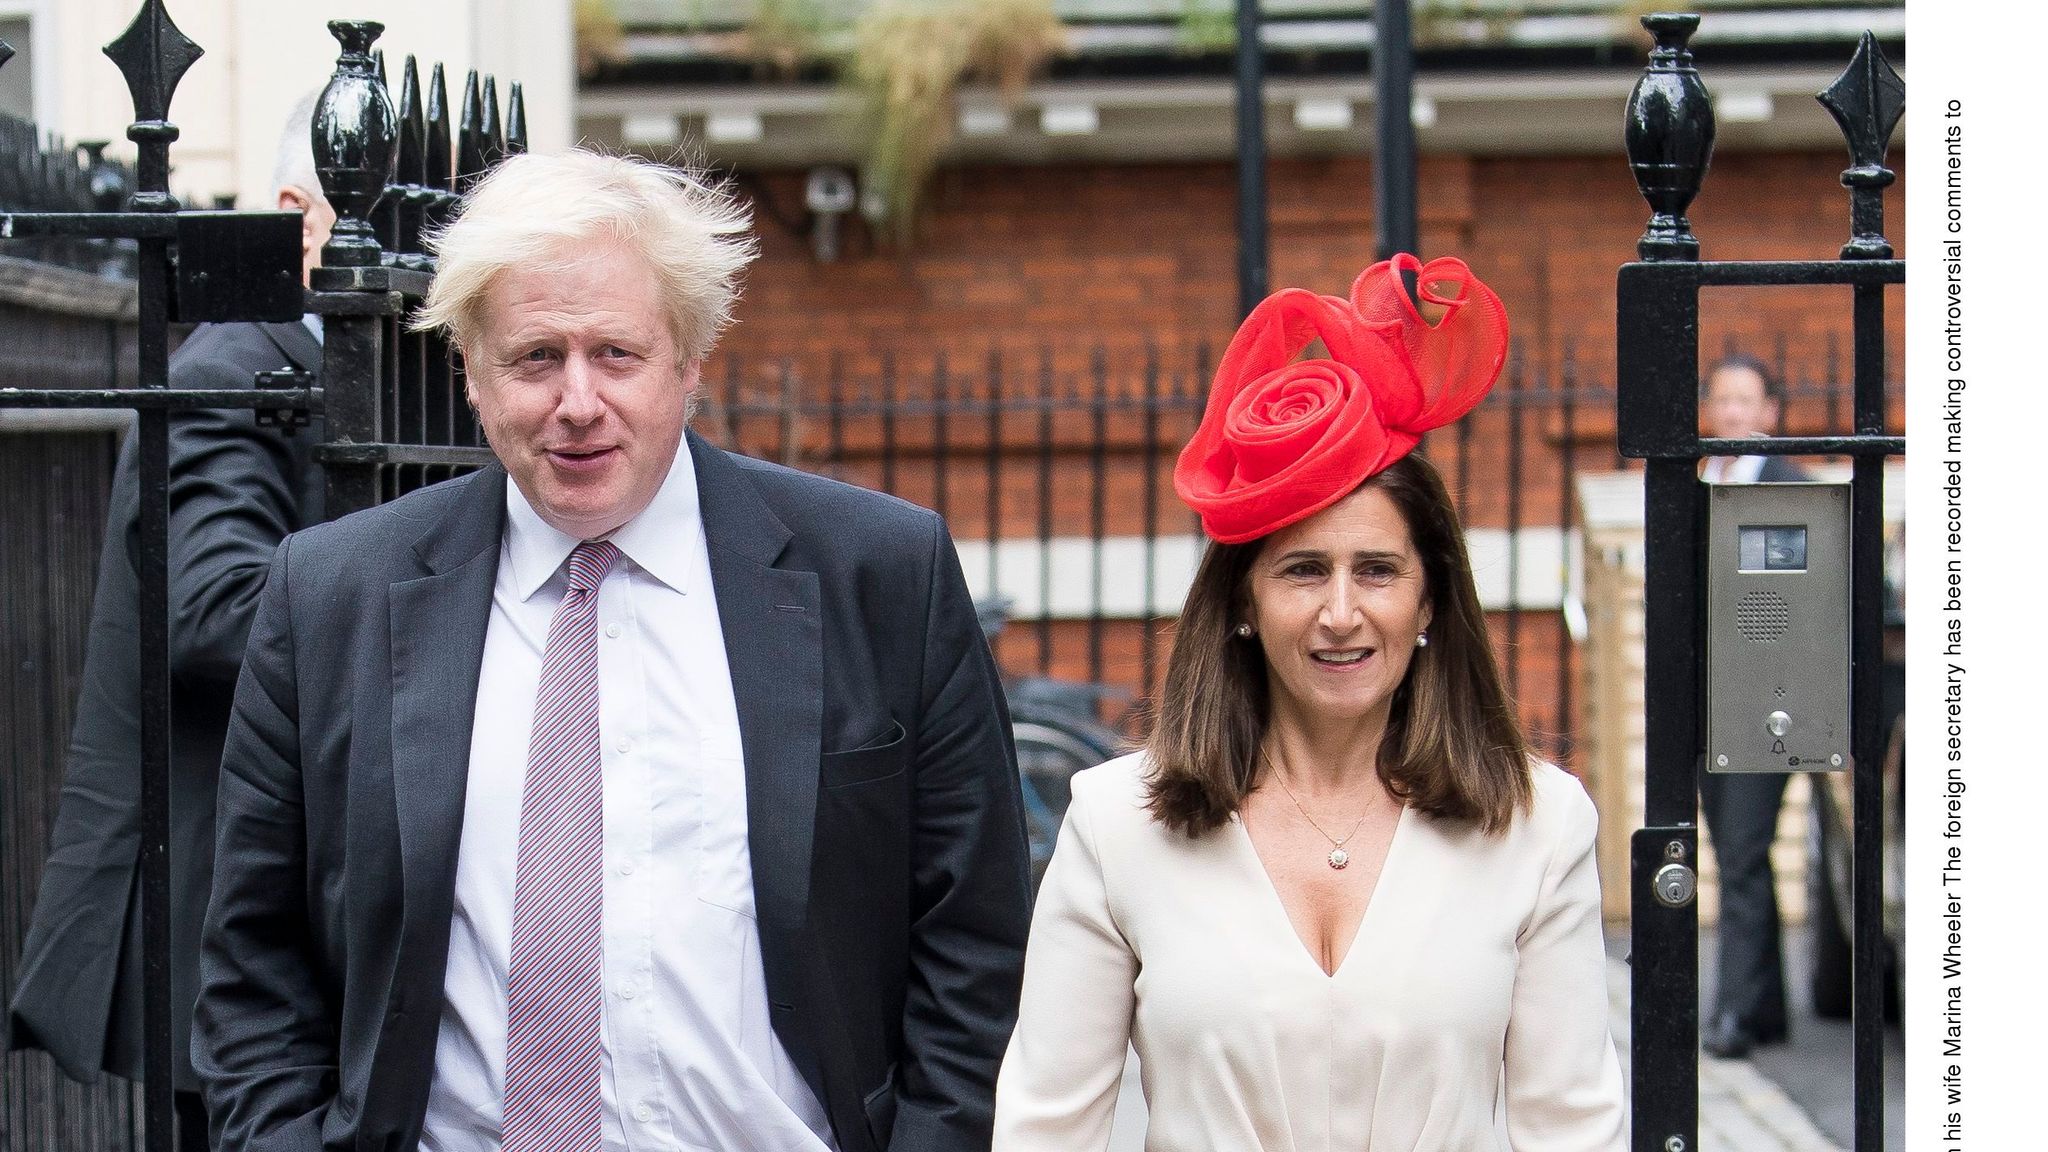 Boris Johnson And Wife Marina Wheeler To Divorce After Separating Some Time Ago Politics